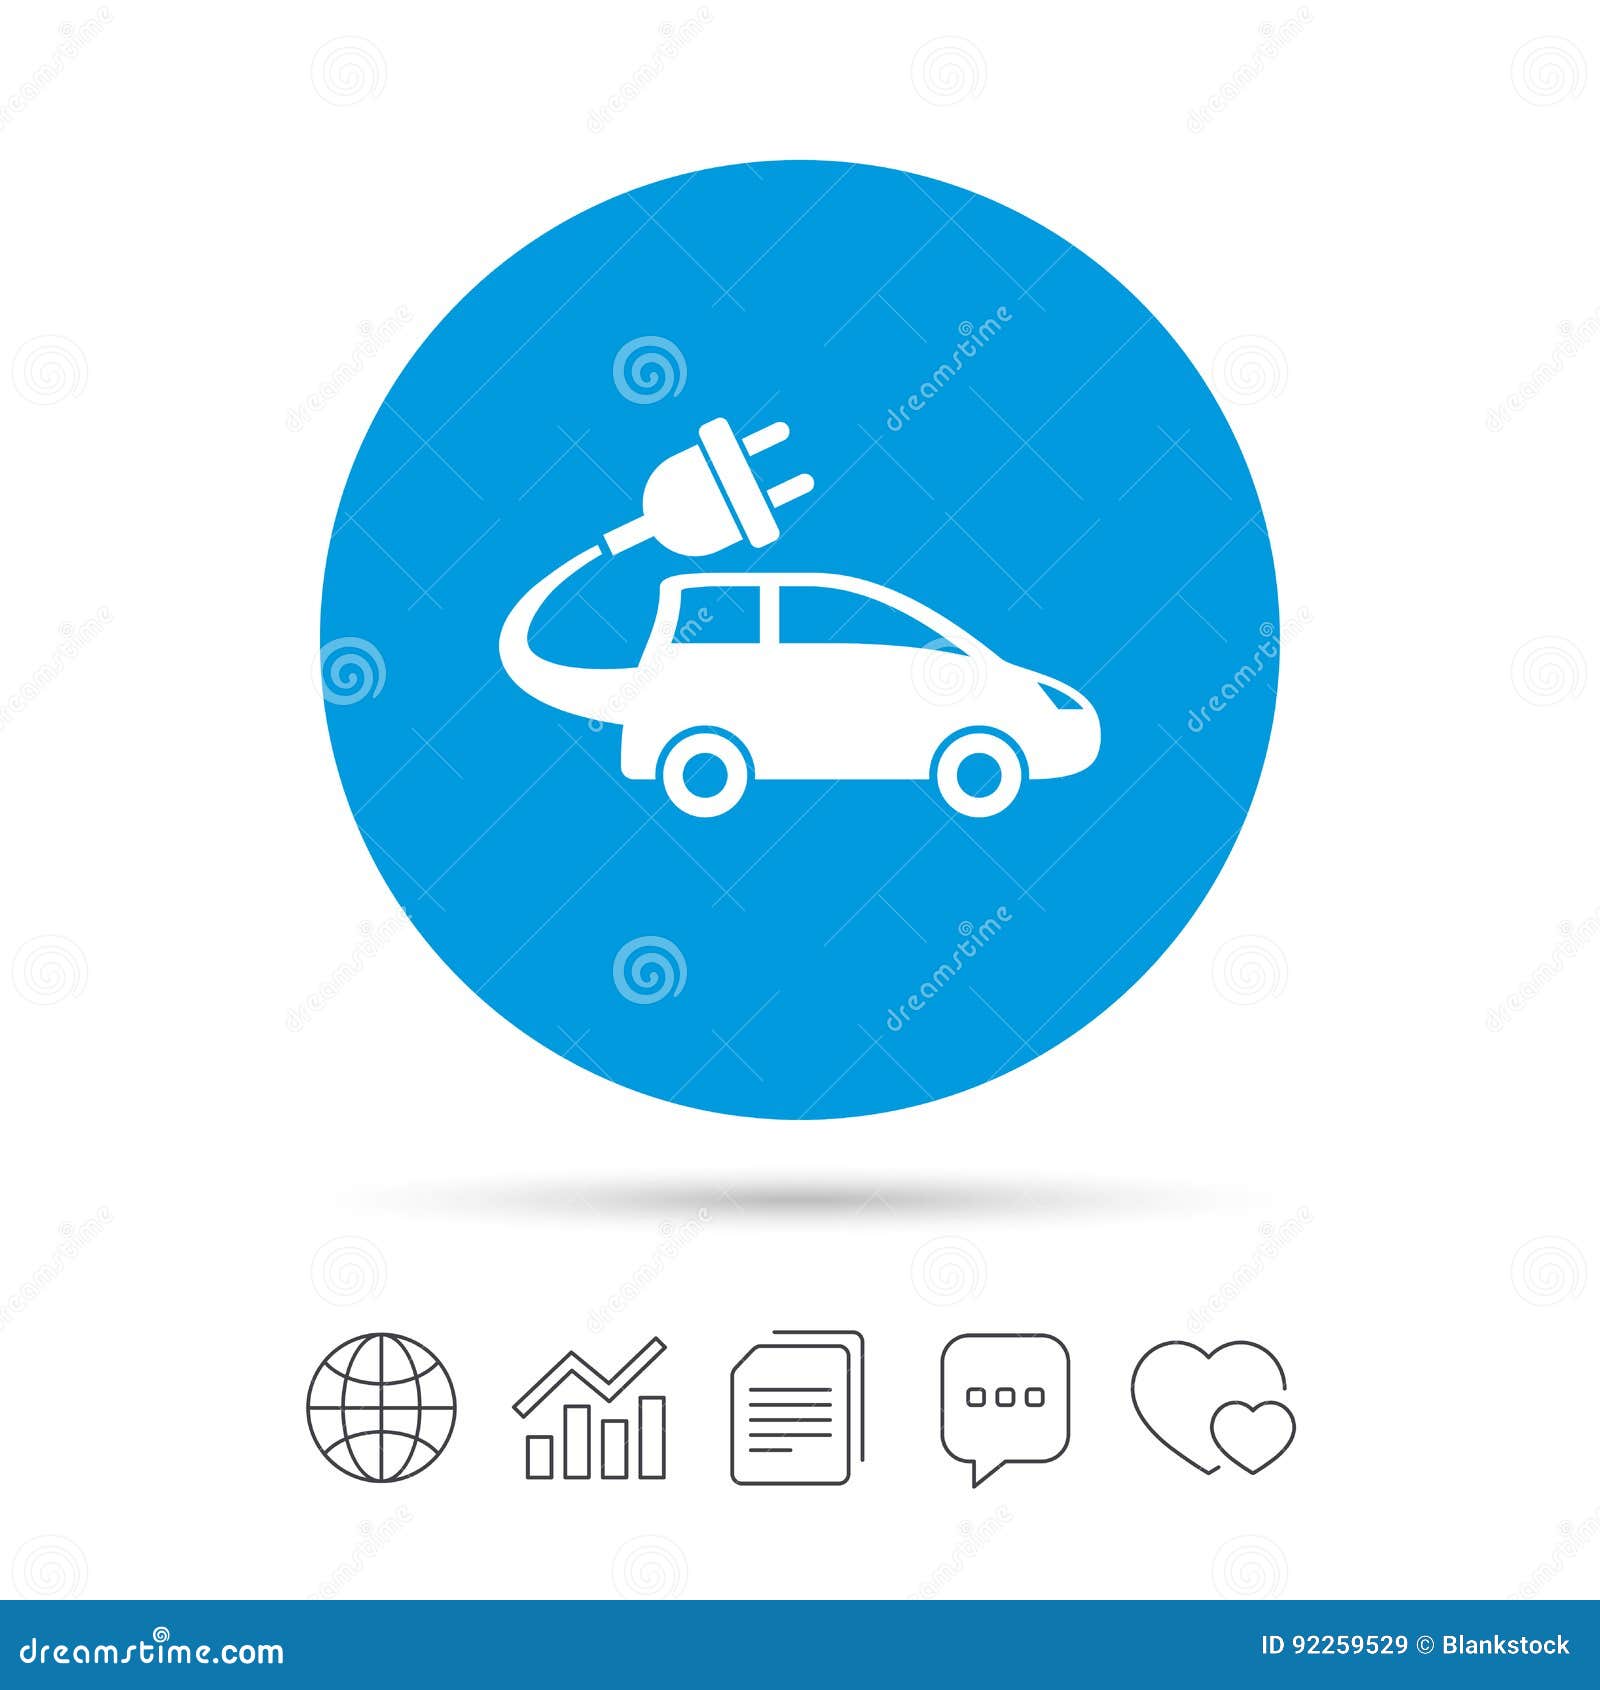 Vehicle Symbol Chart